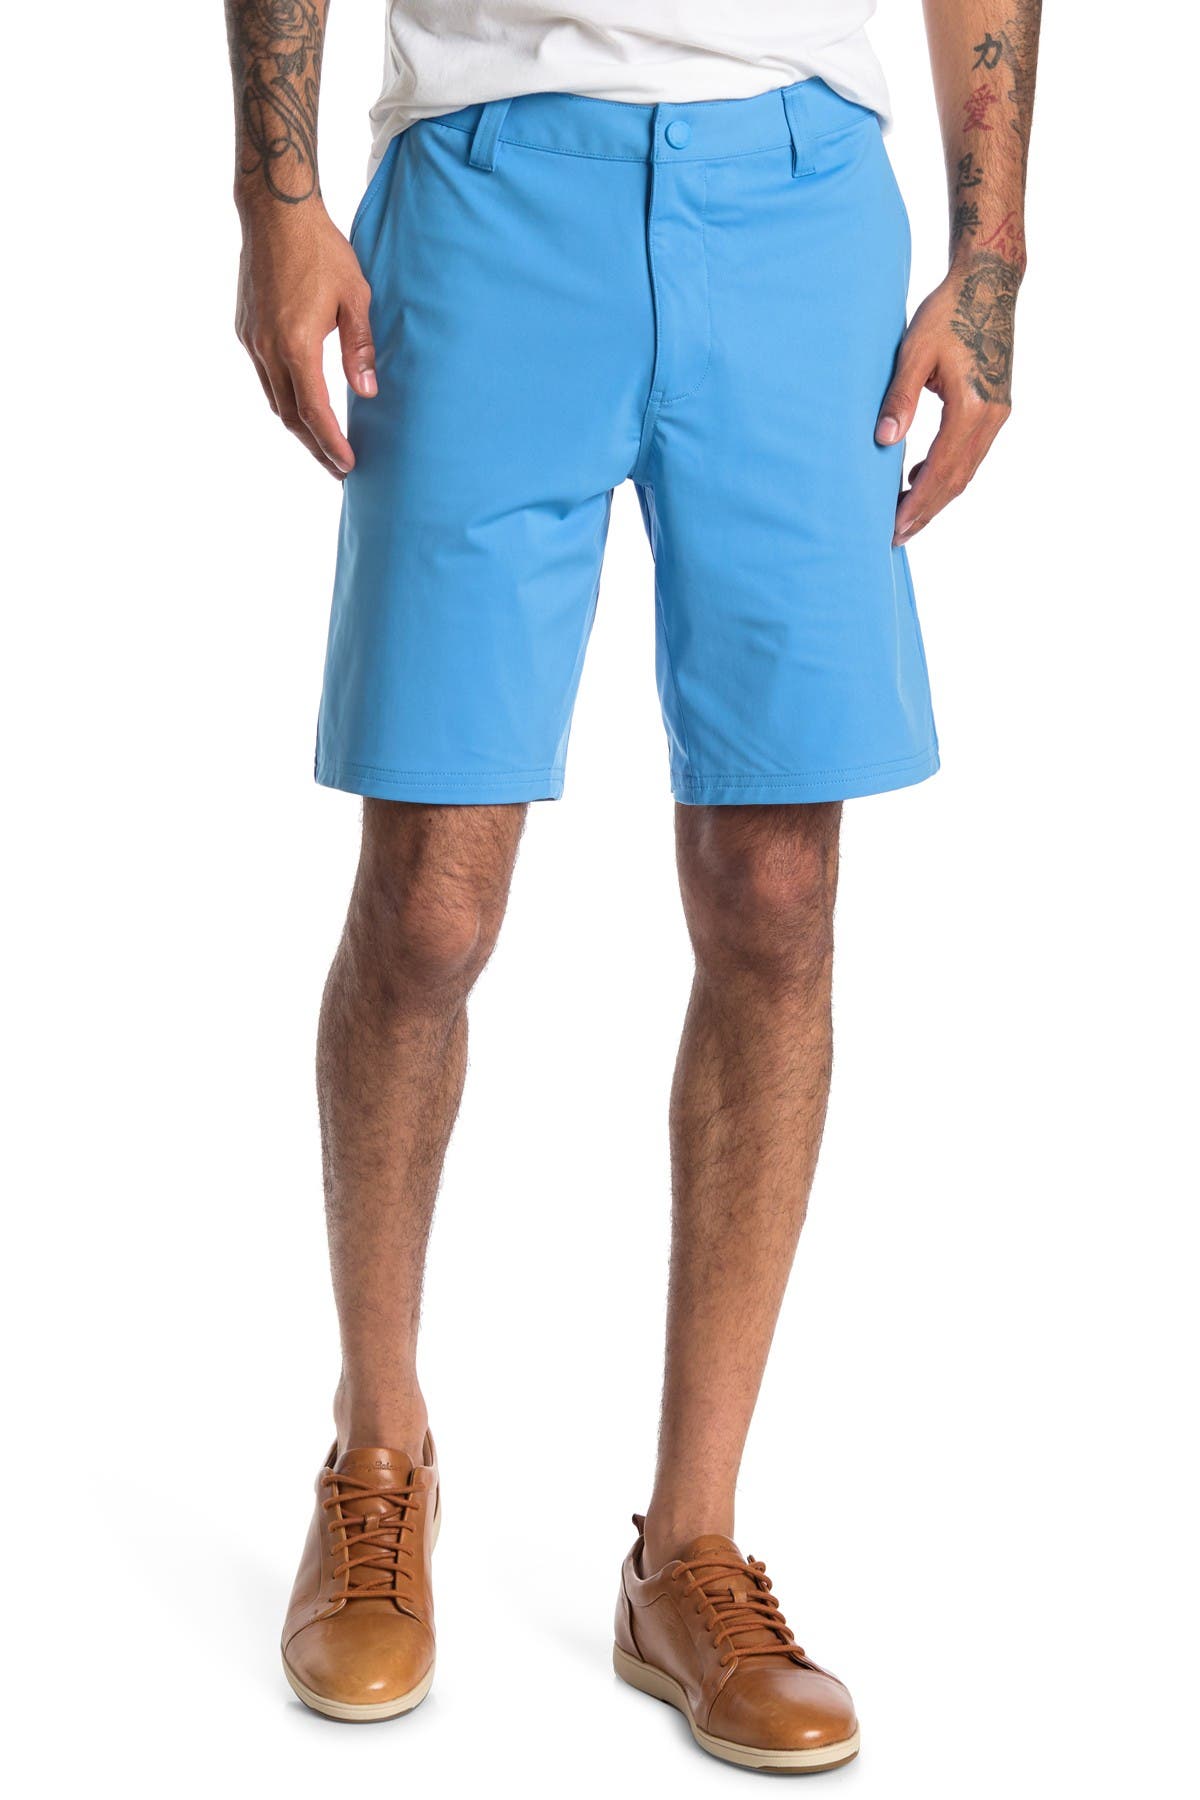 Rhone Commuter Shorts In Bright Blue5